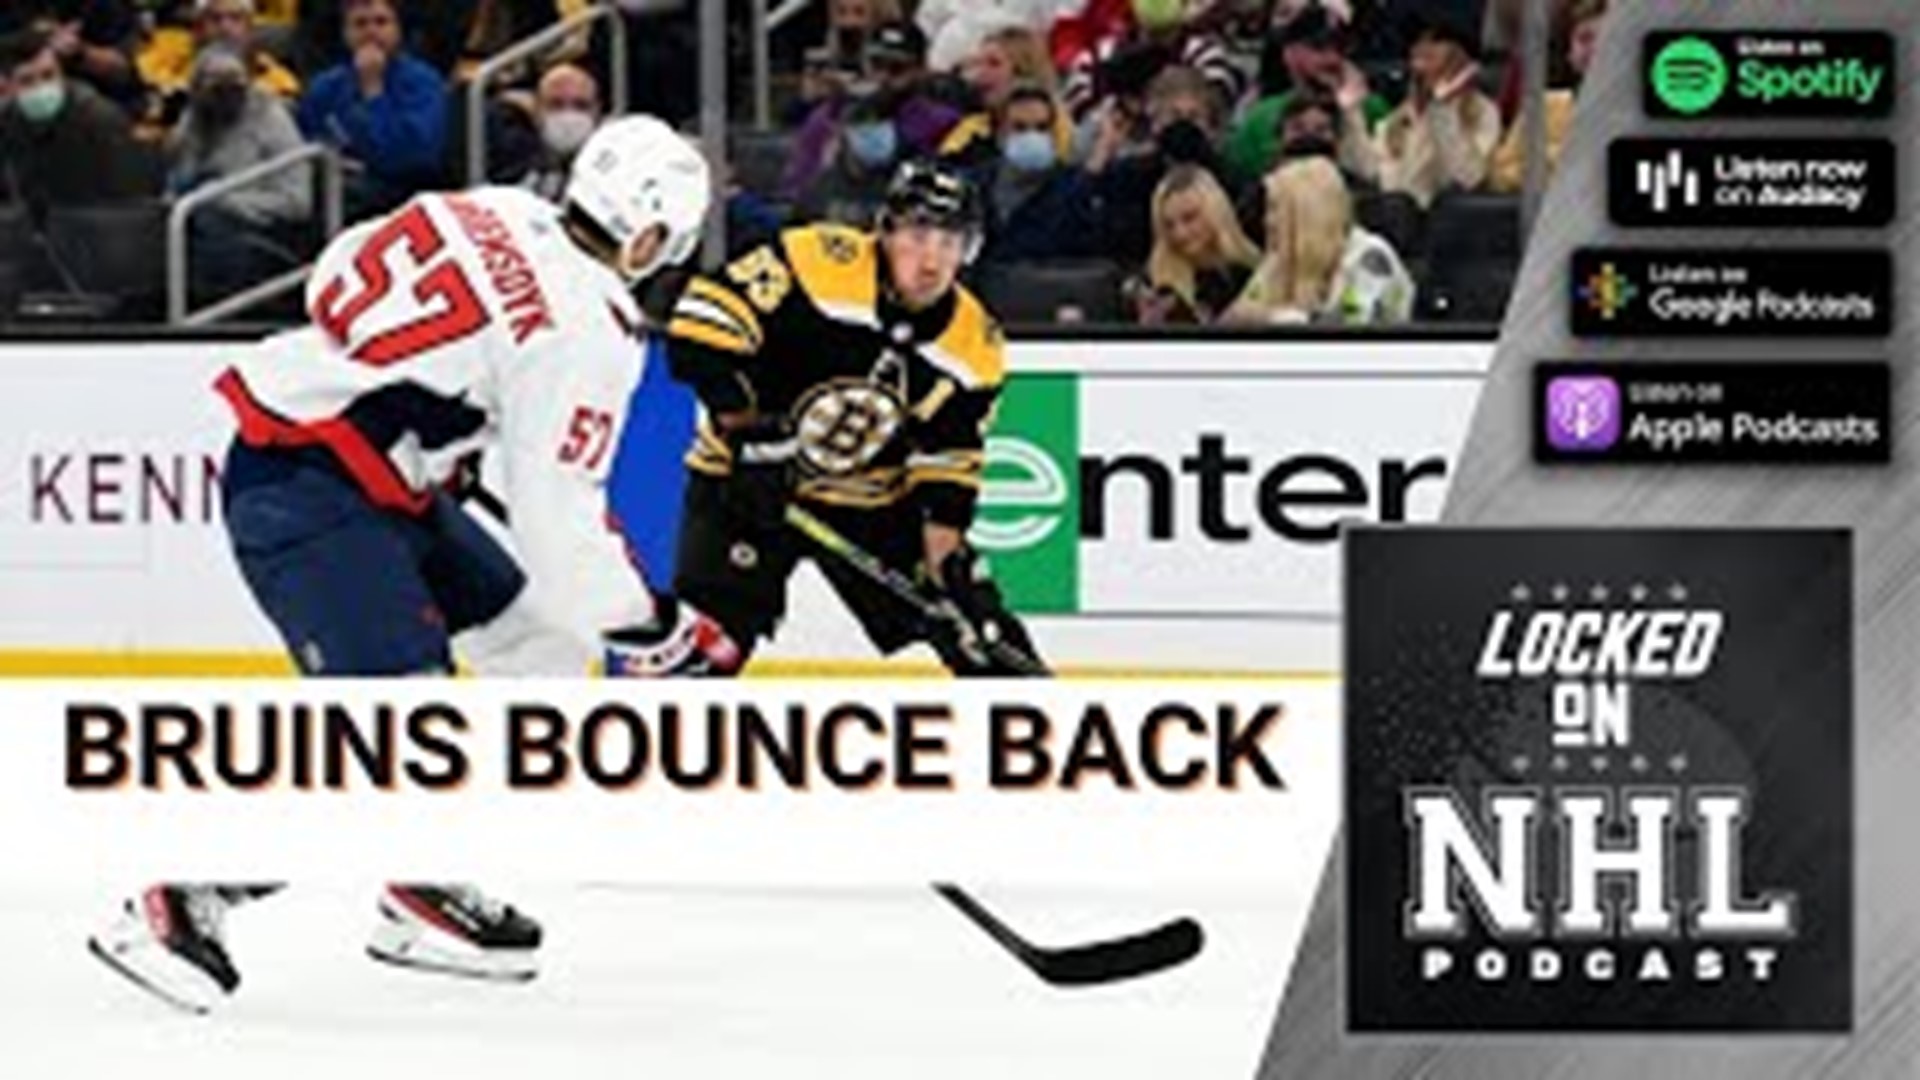 The Boston Bruins Bounce Back!